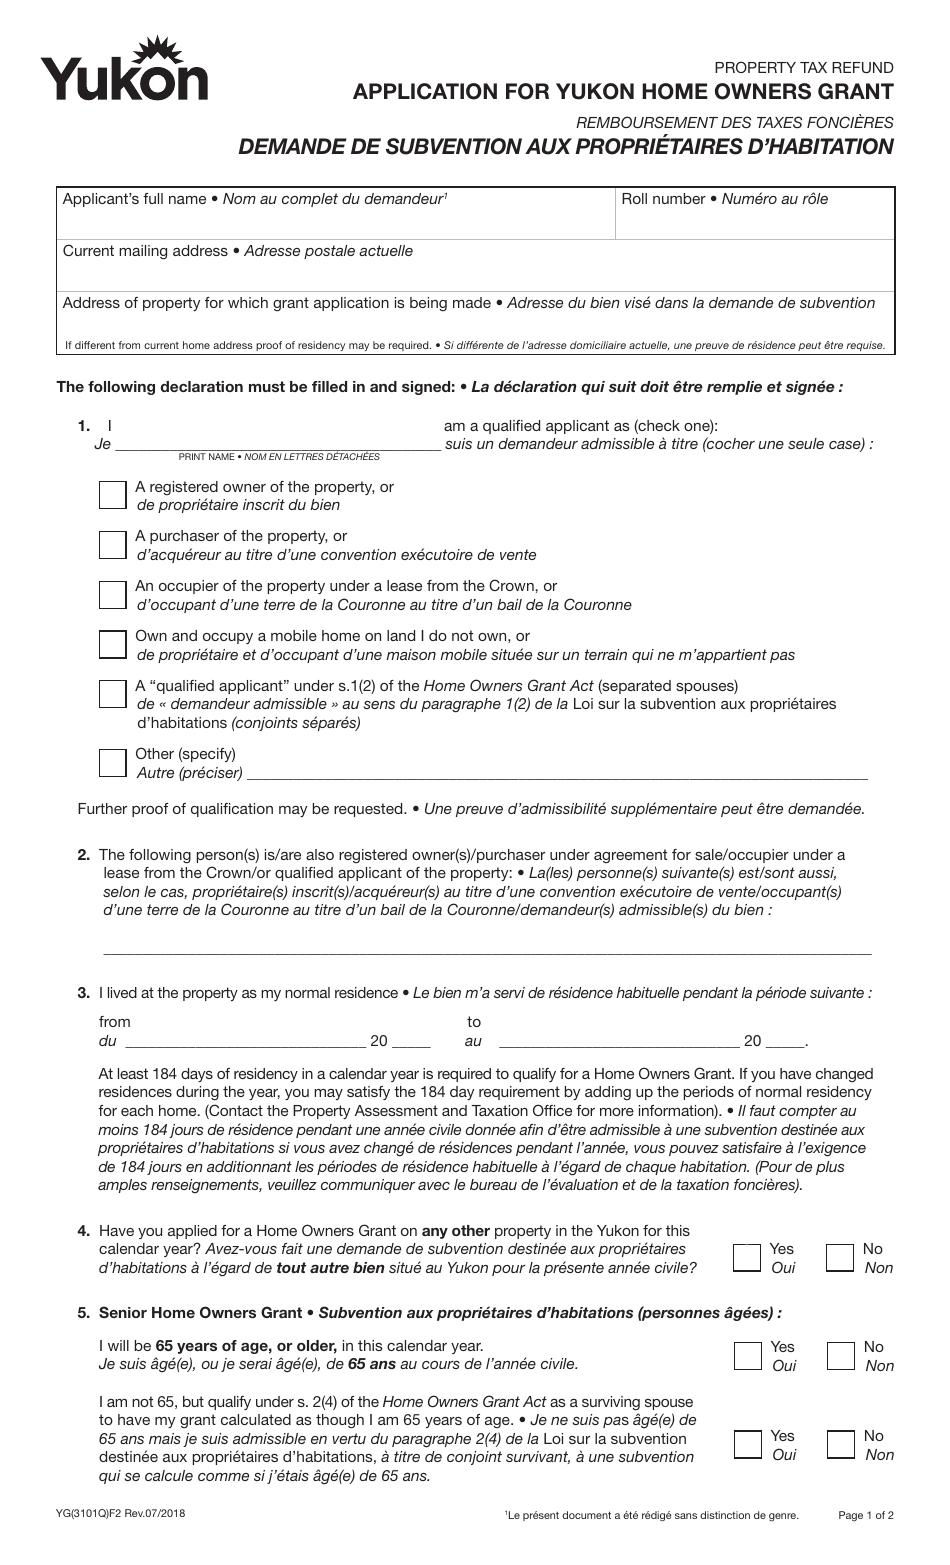 Form YG3101 Application for Yukon Home Owners Grant - Yukon, Canada (English / French), Page 1